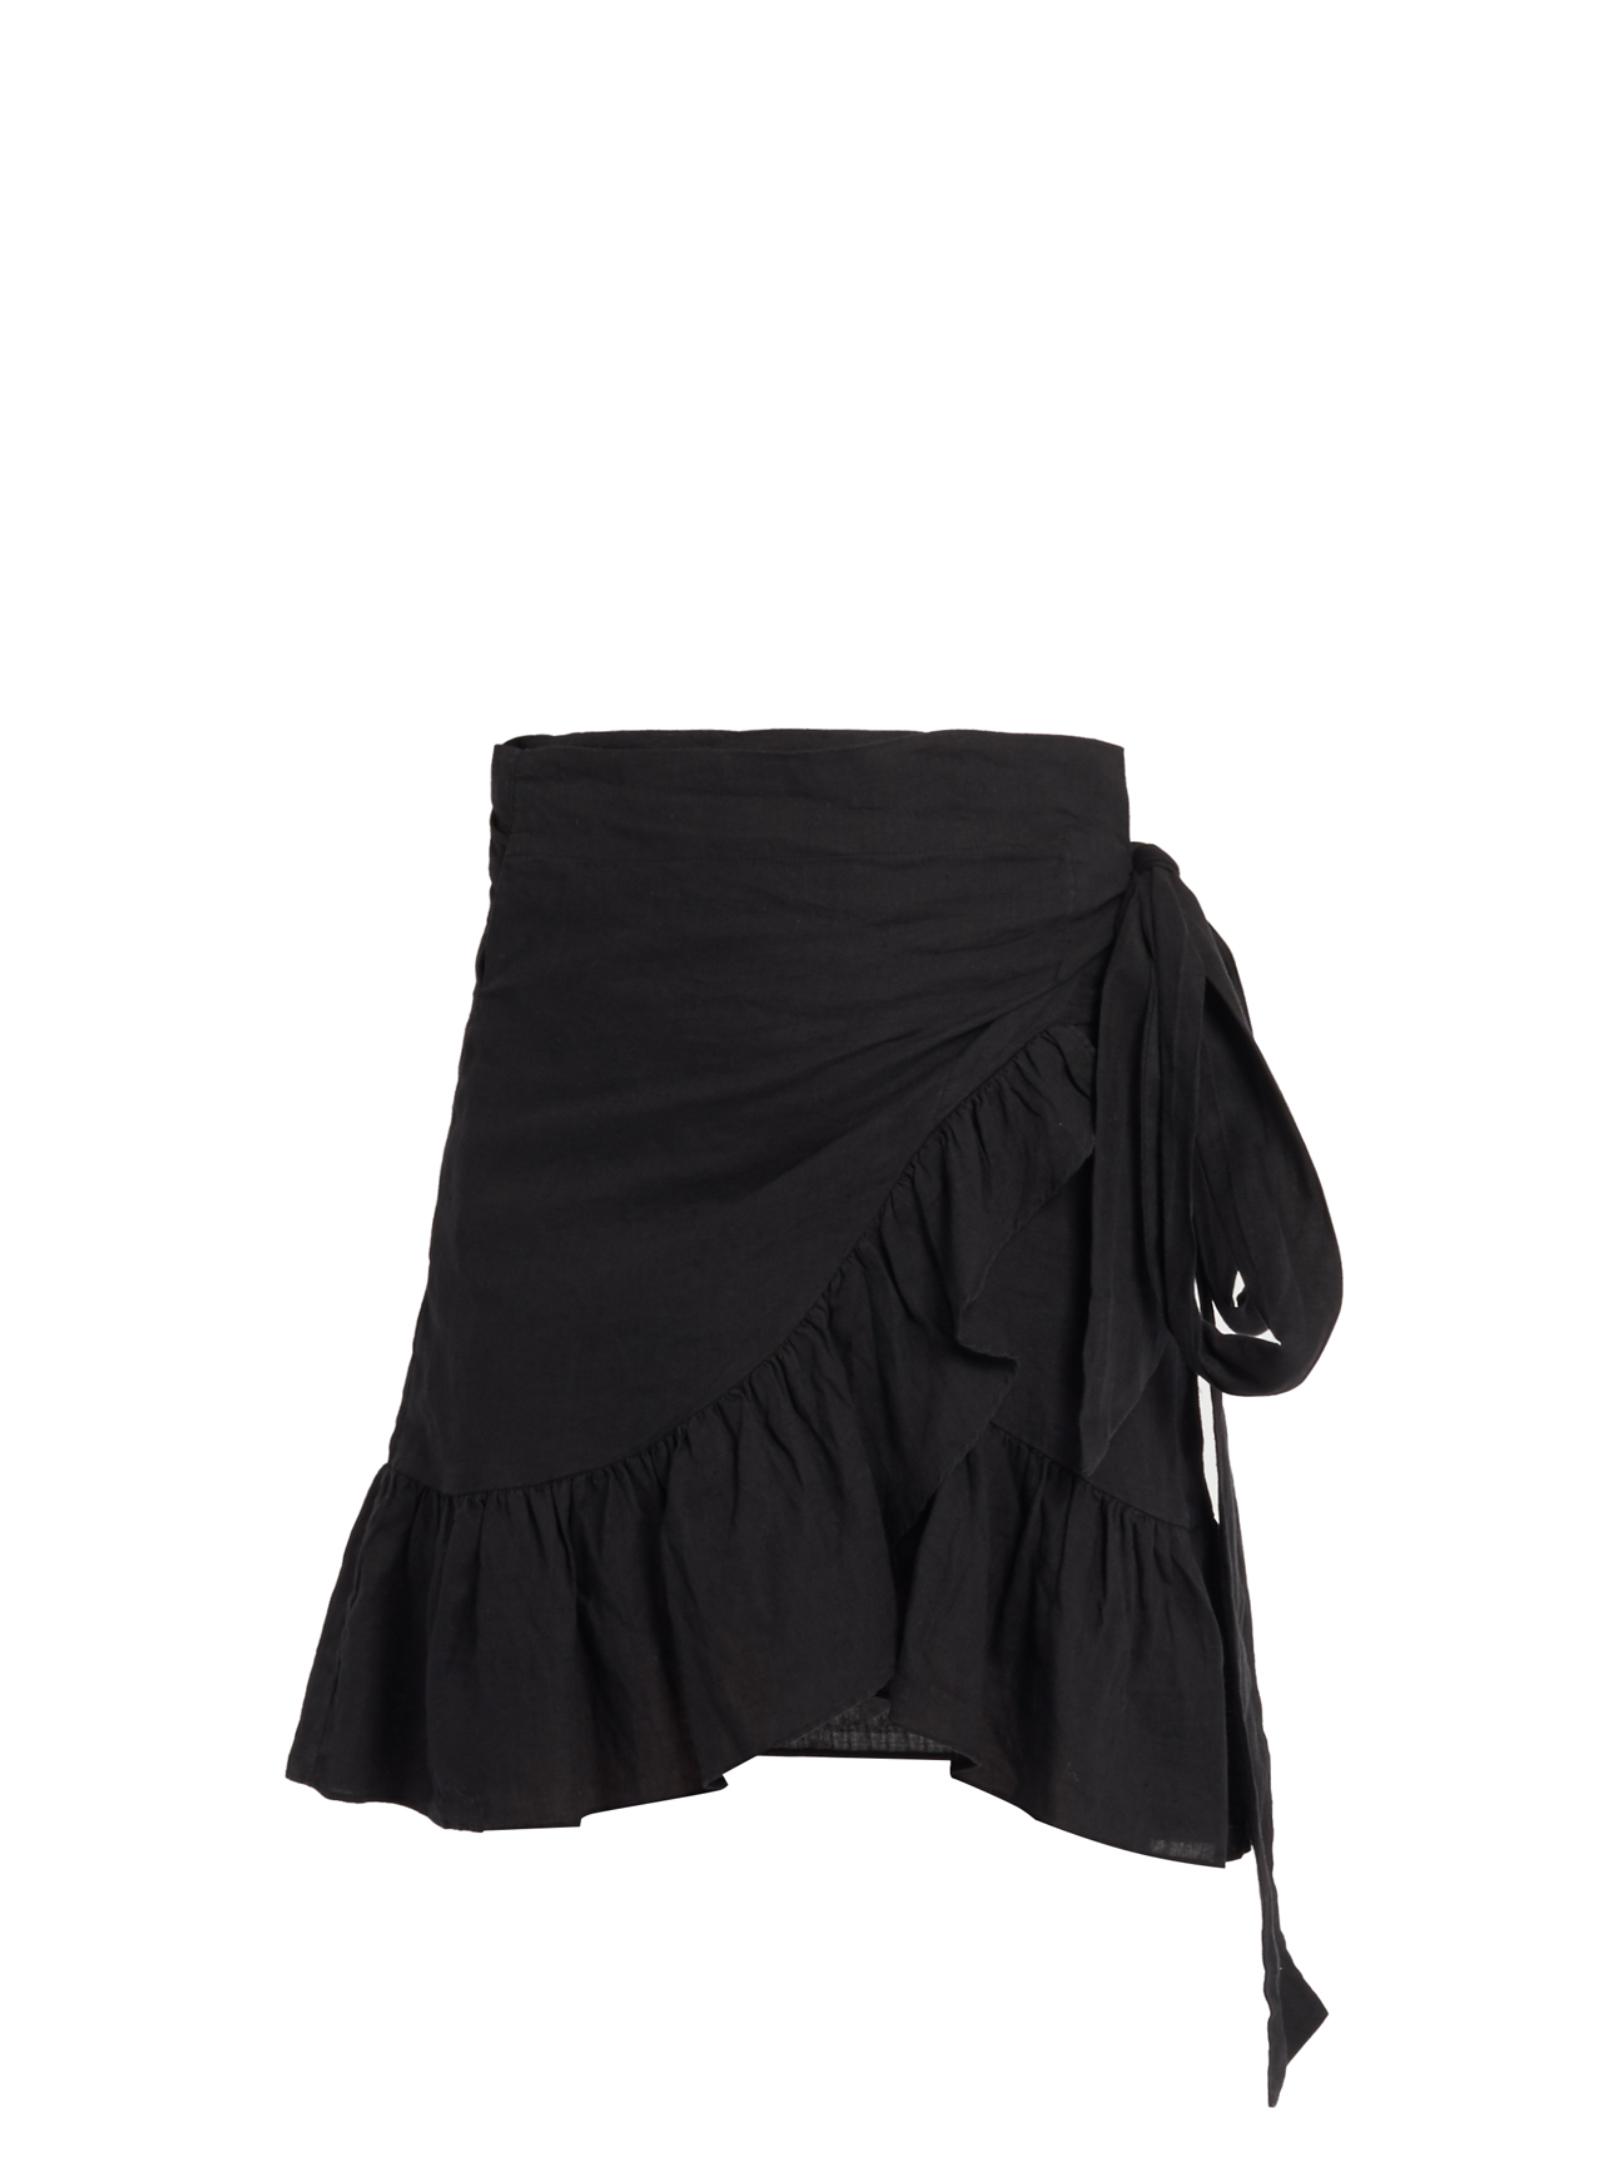 Étoile Isabel Marant Dempster Ruffled Mini Skirt in Black - Lyst